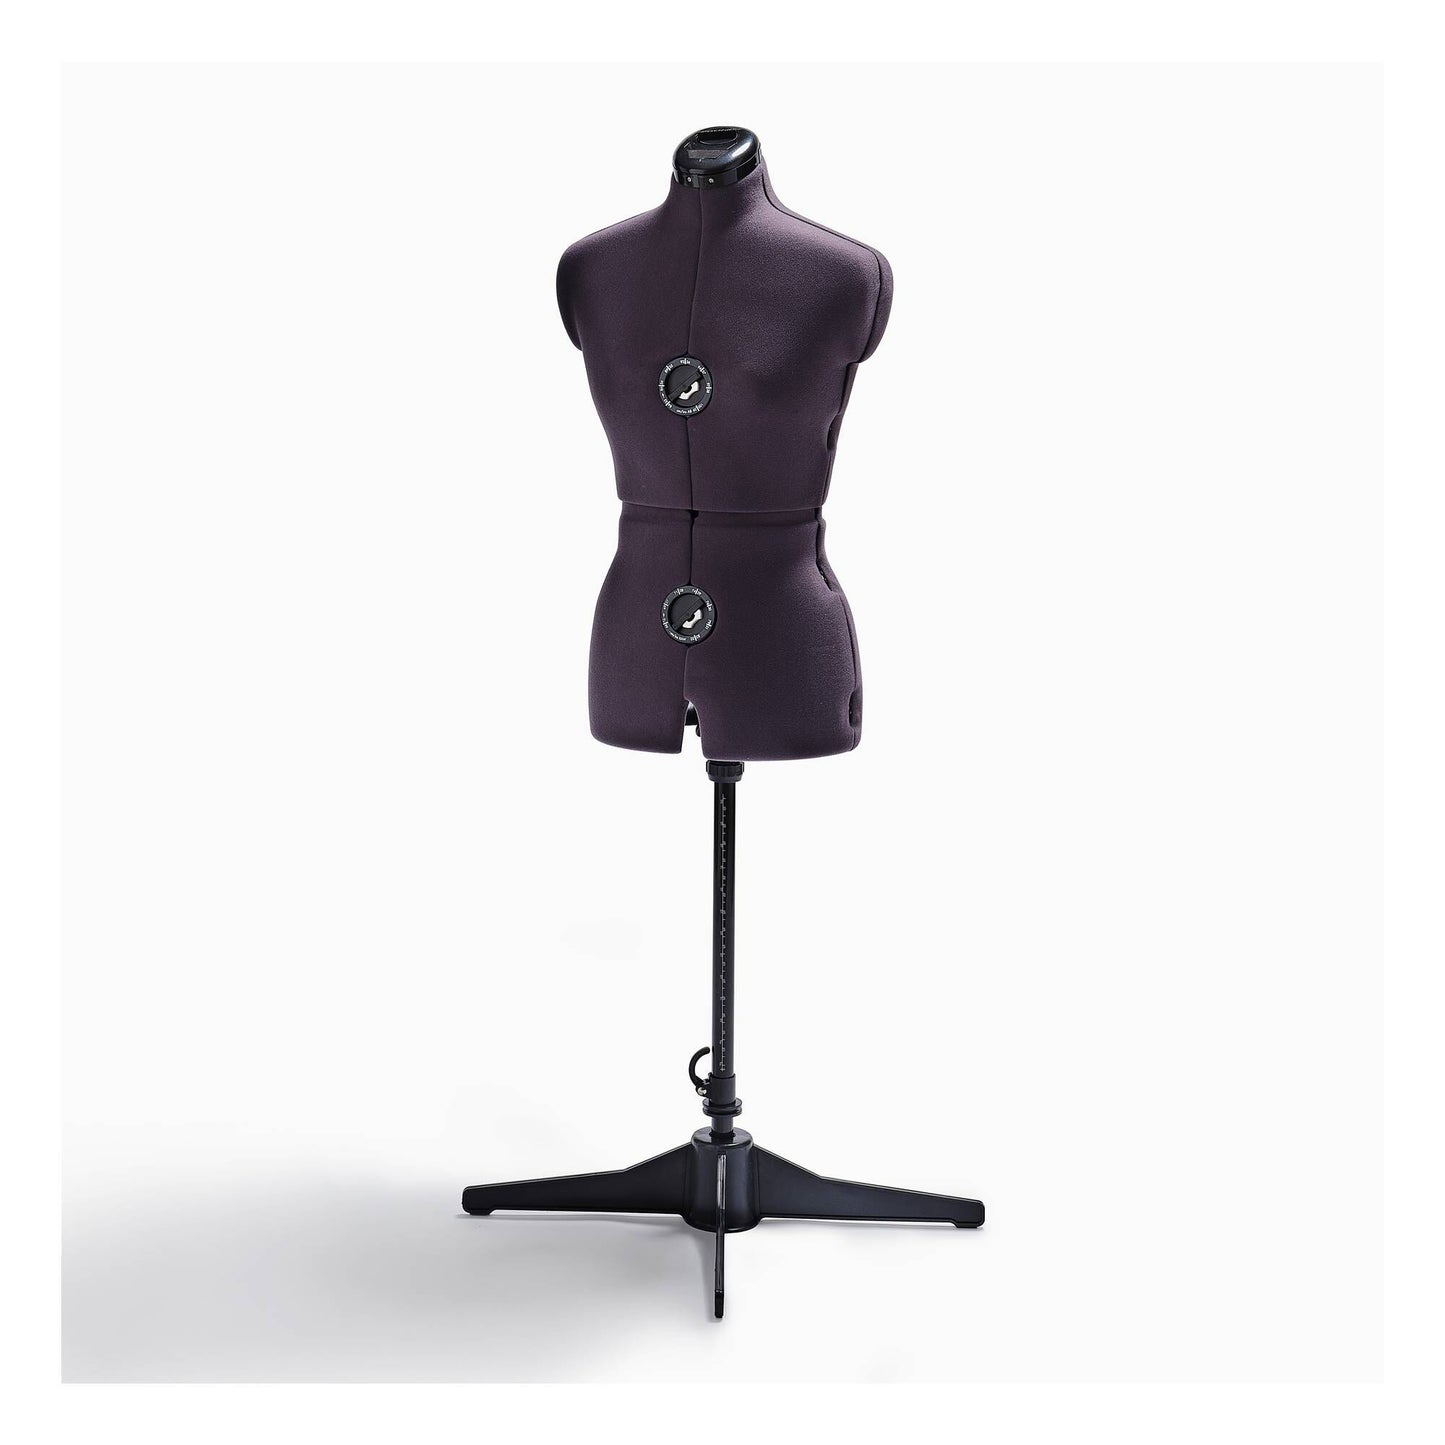 Adjustable Dress Form / Mannequin - Heavy Duty Design * Todays special deal *